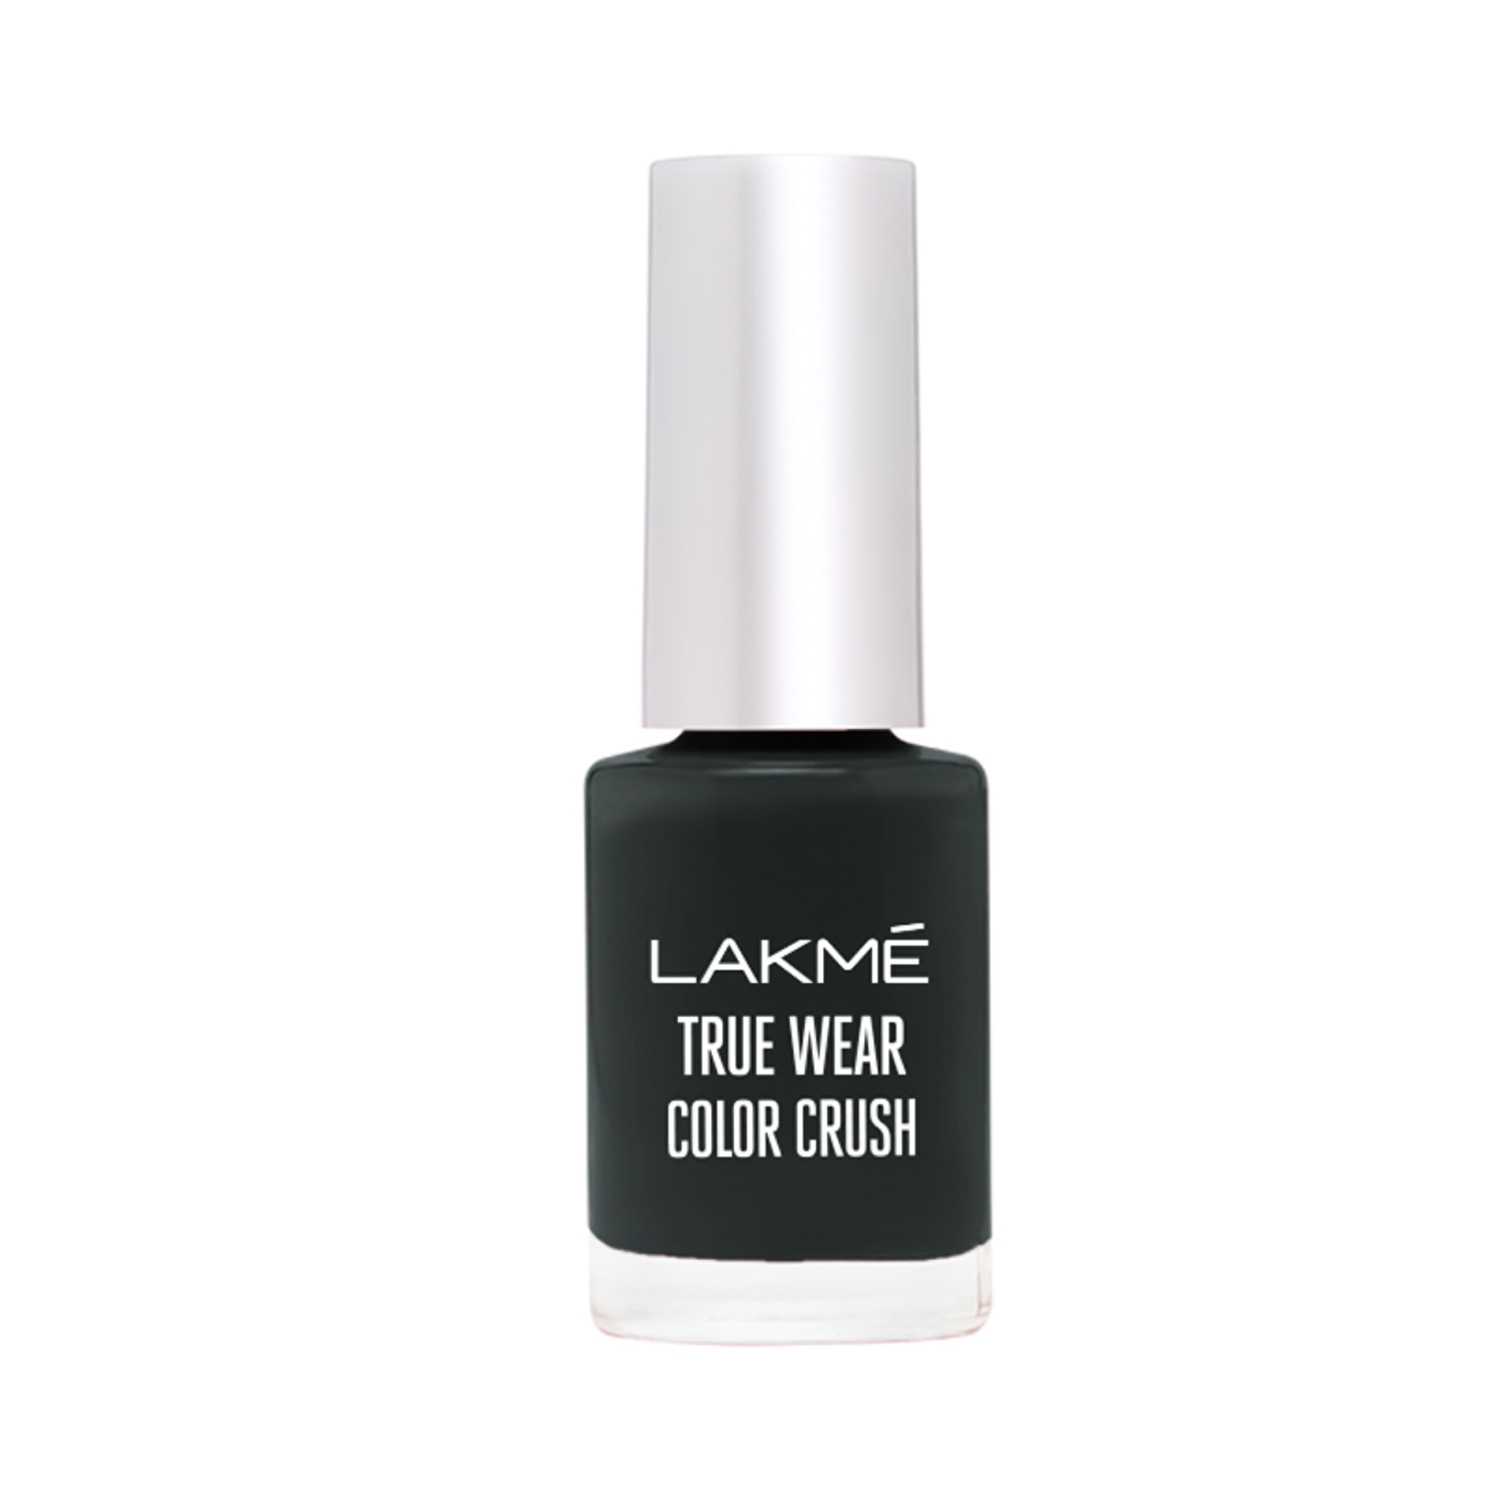 Buy Lakme Color Crush Nail Art Online